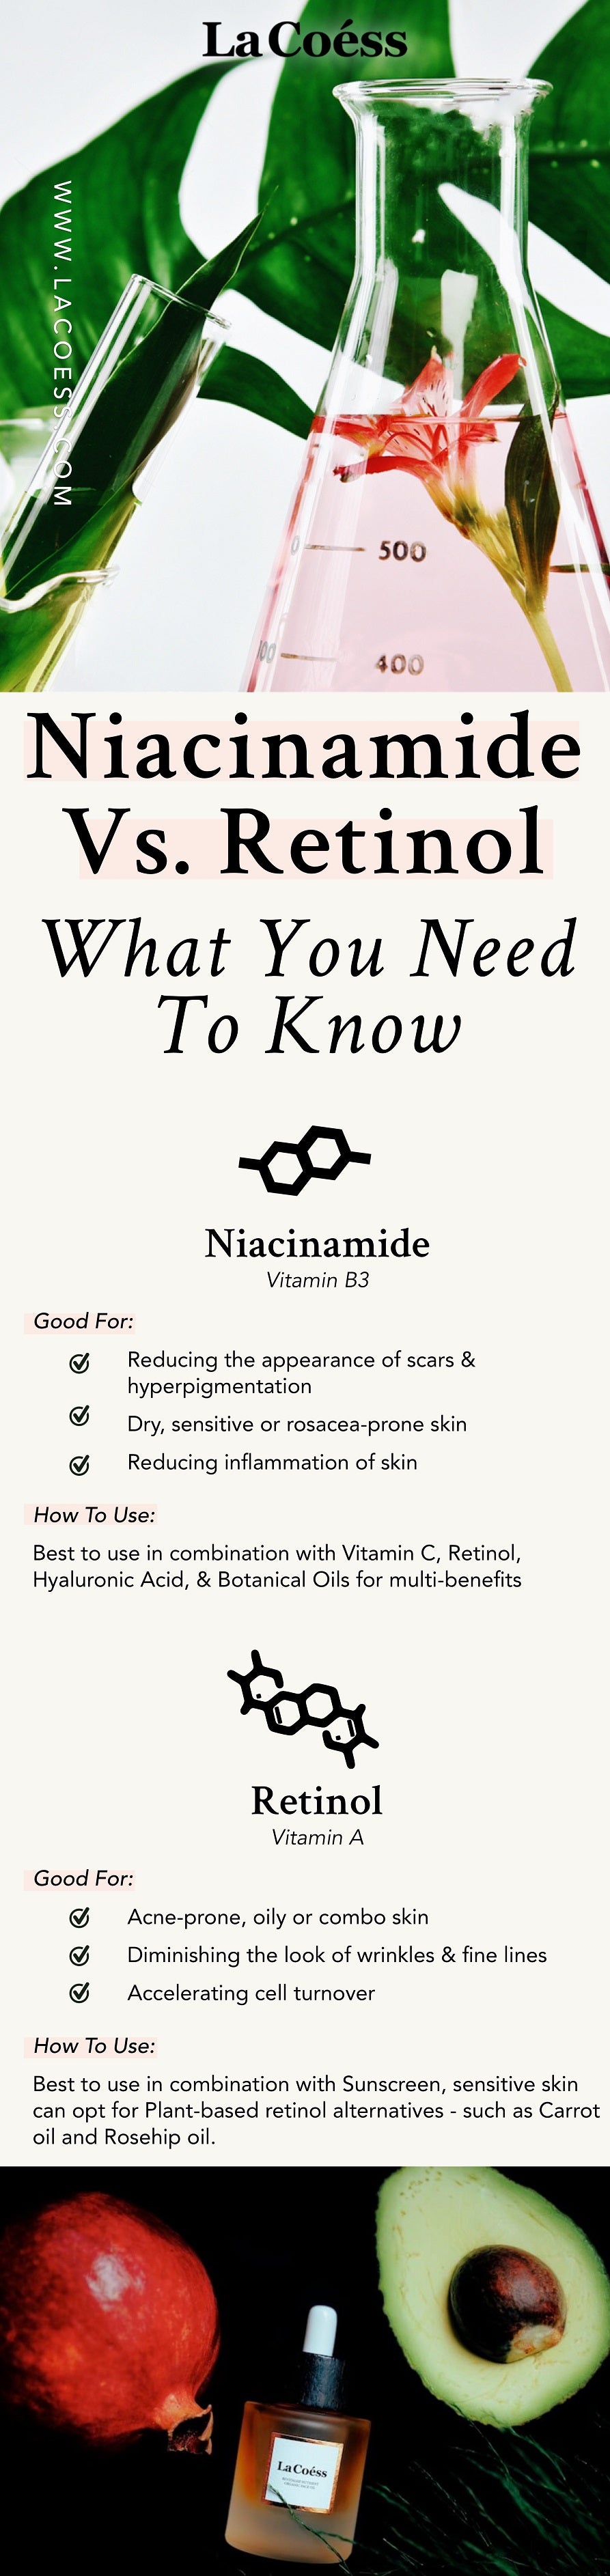 Niacinamide Vs. Retinol What You Need To Know